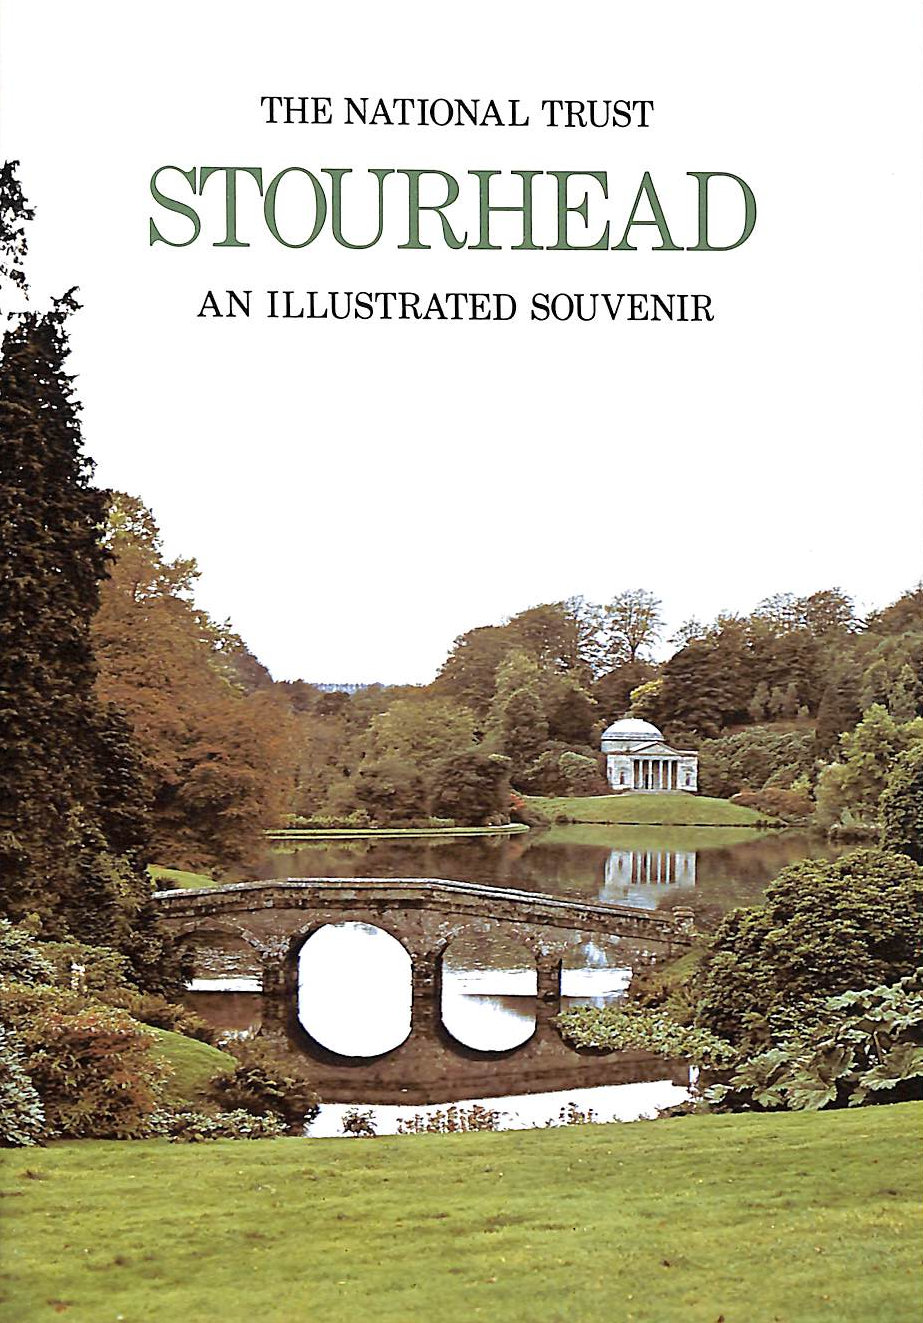 DUDLEY DODD, FRED HUNT, AND CAROLA STUART - Stourhead Garden An illustrated souvenir